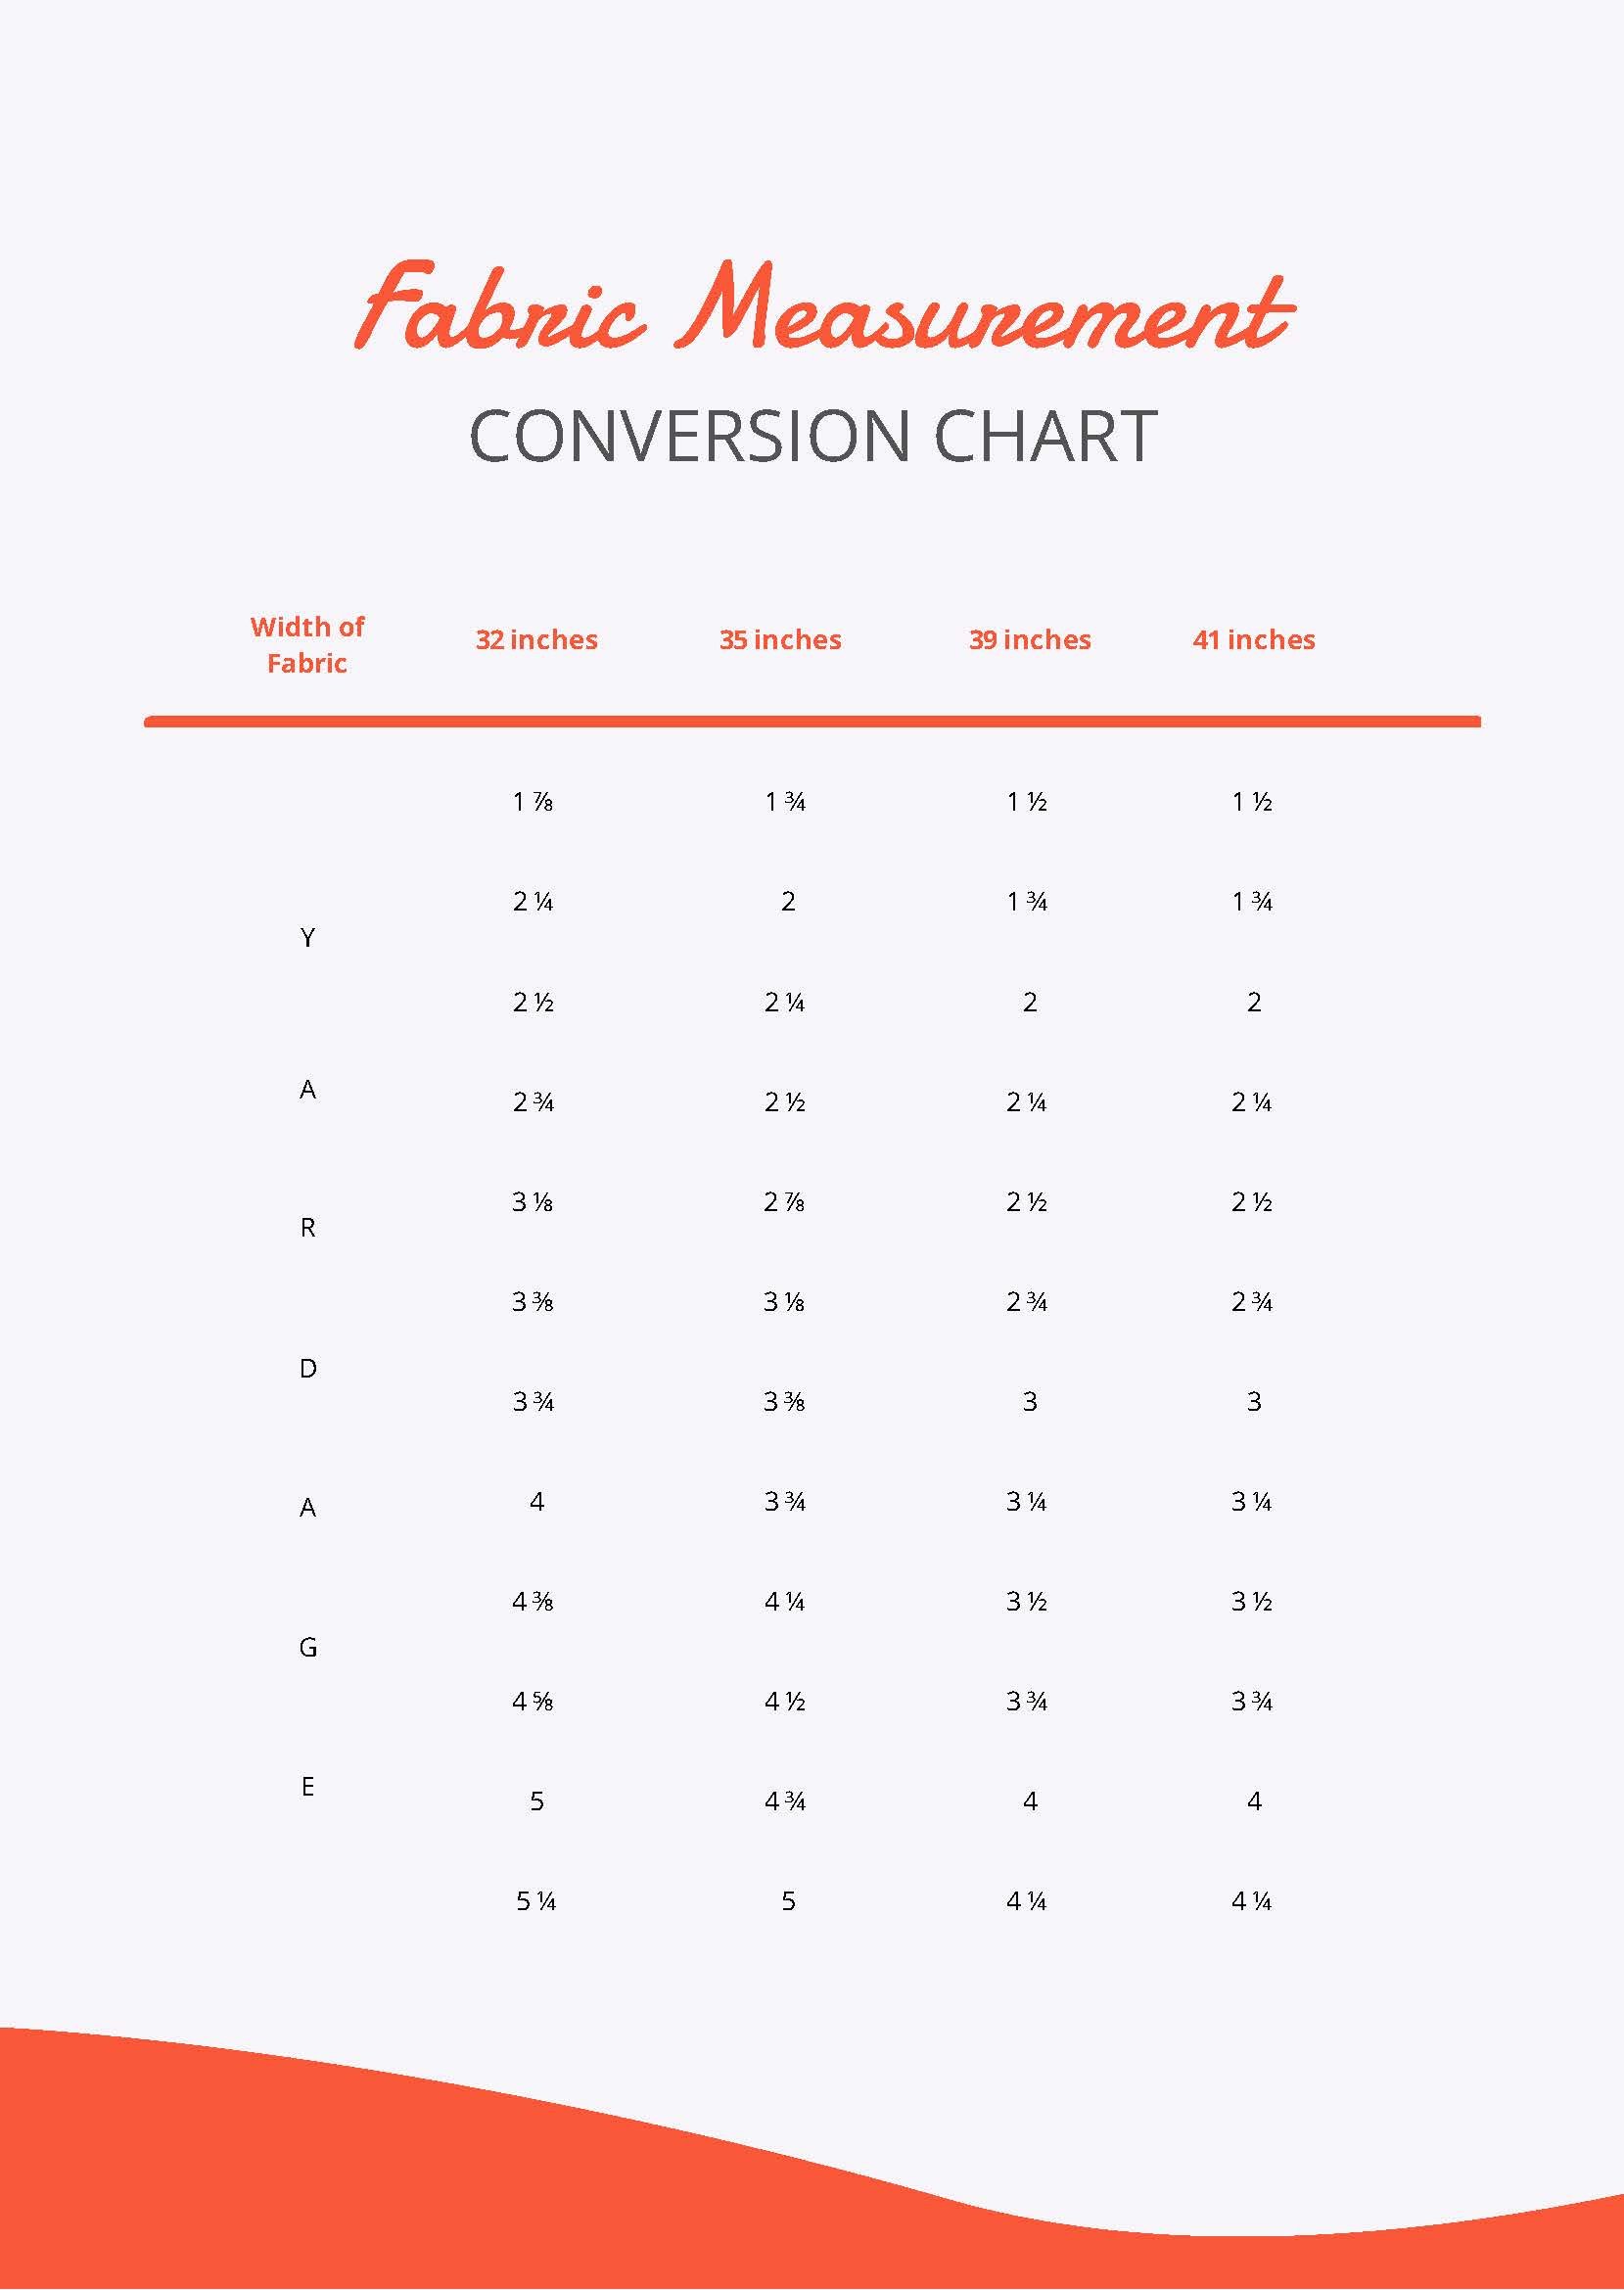 Fabric Measurement Conversion Chart in PDF